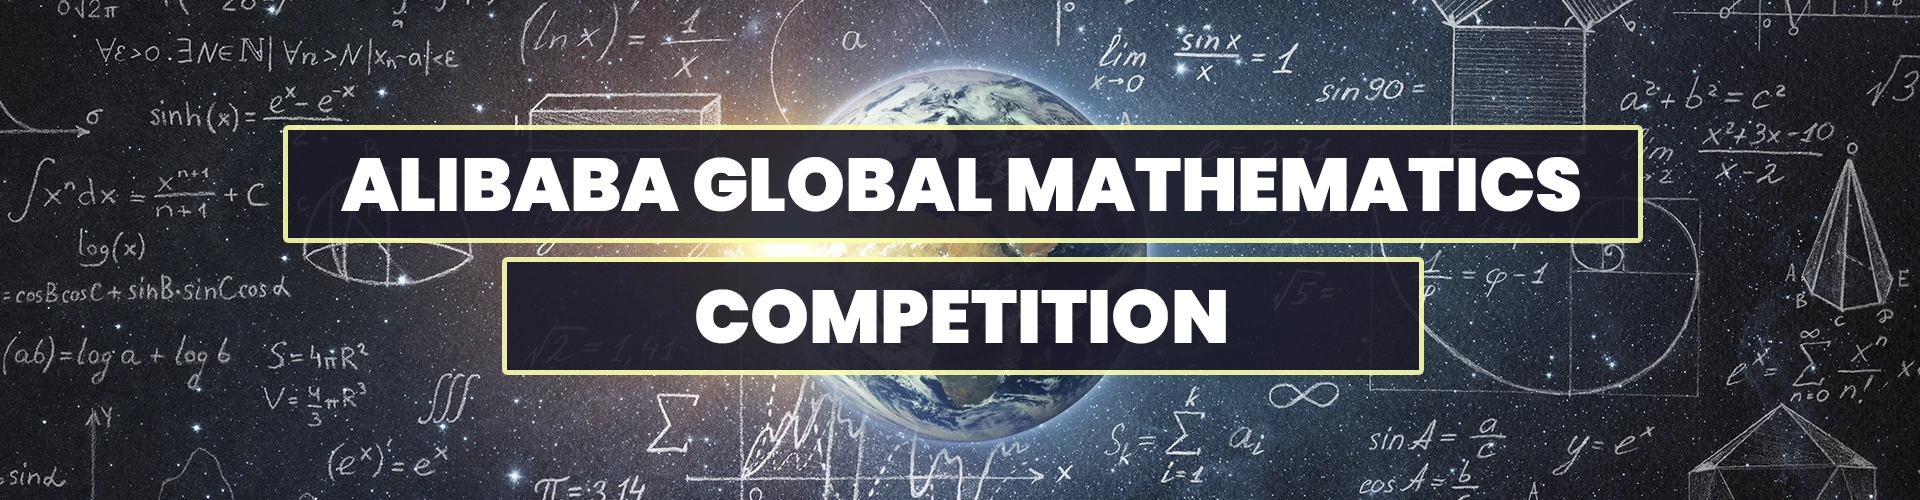 Alibaba Global Mathematics Competition